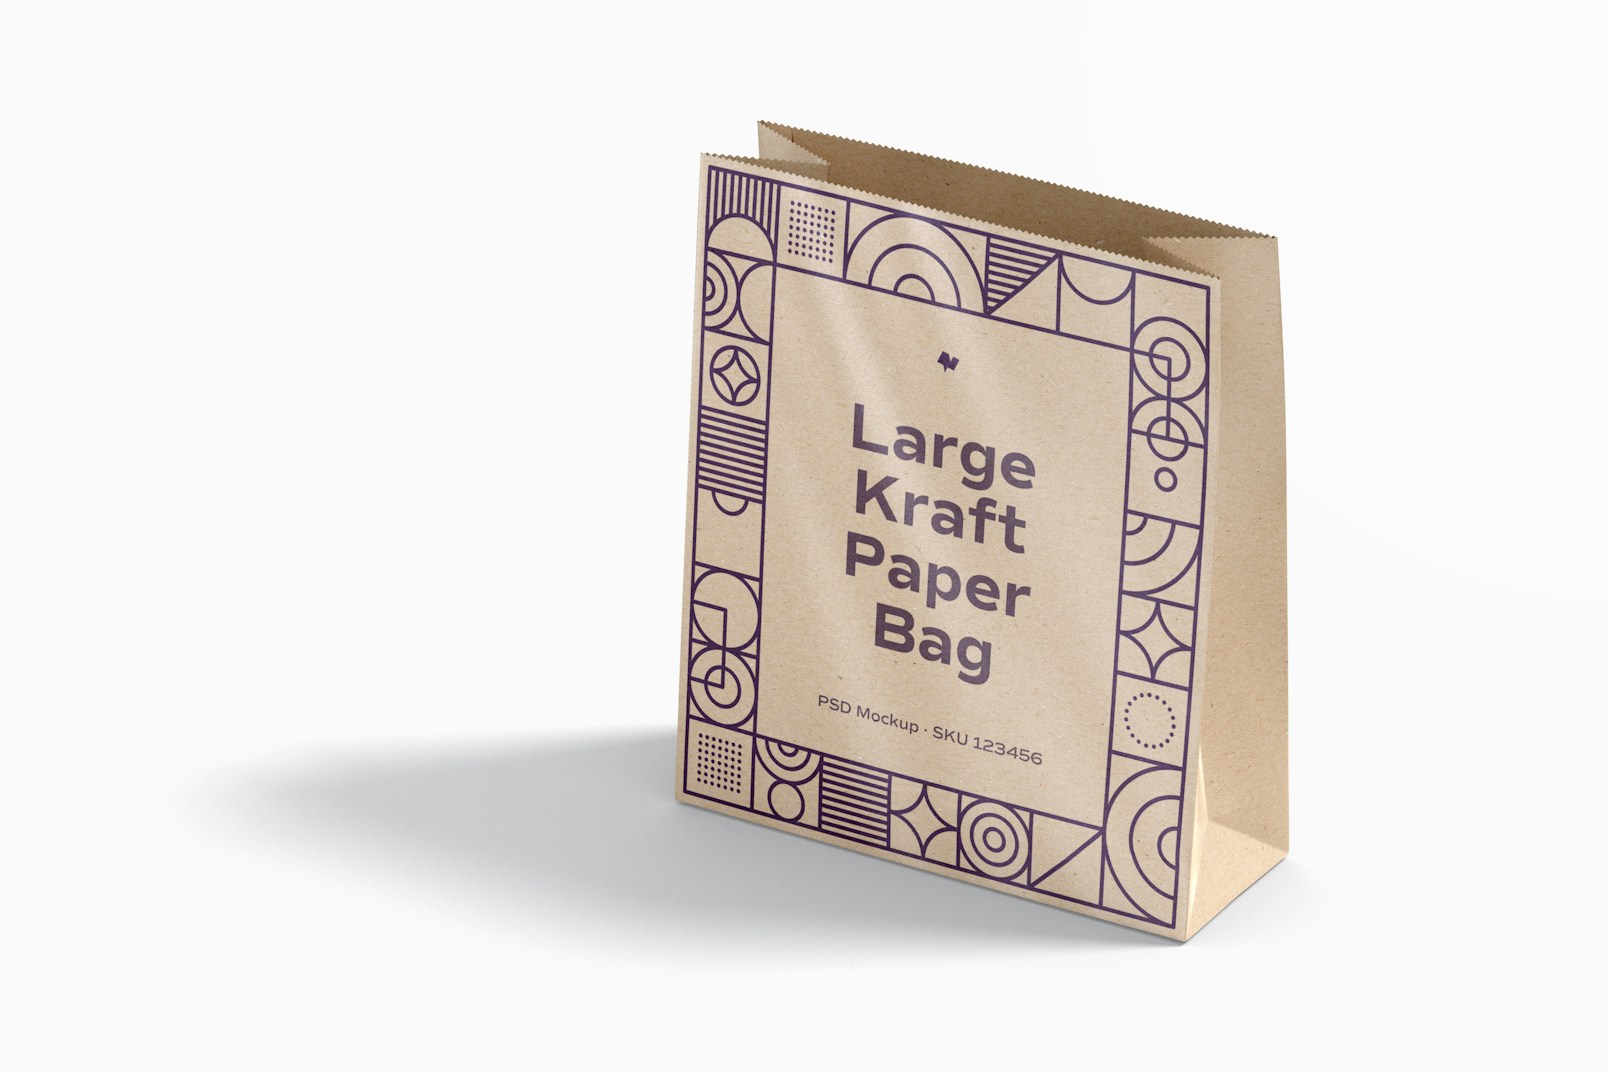 Large Kraft Paper Bag Mockup, Perspective View